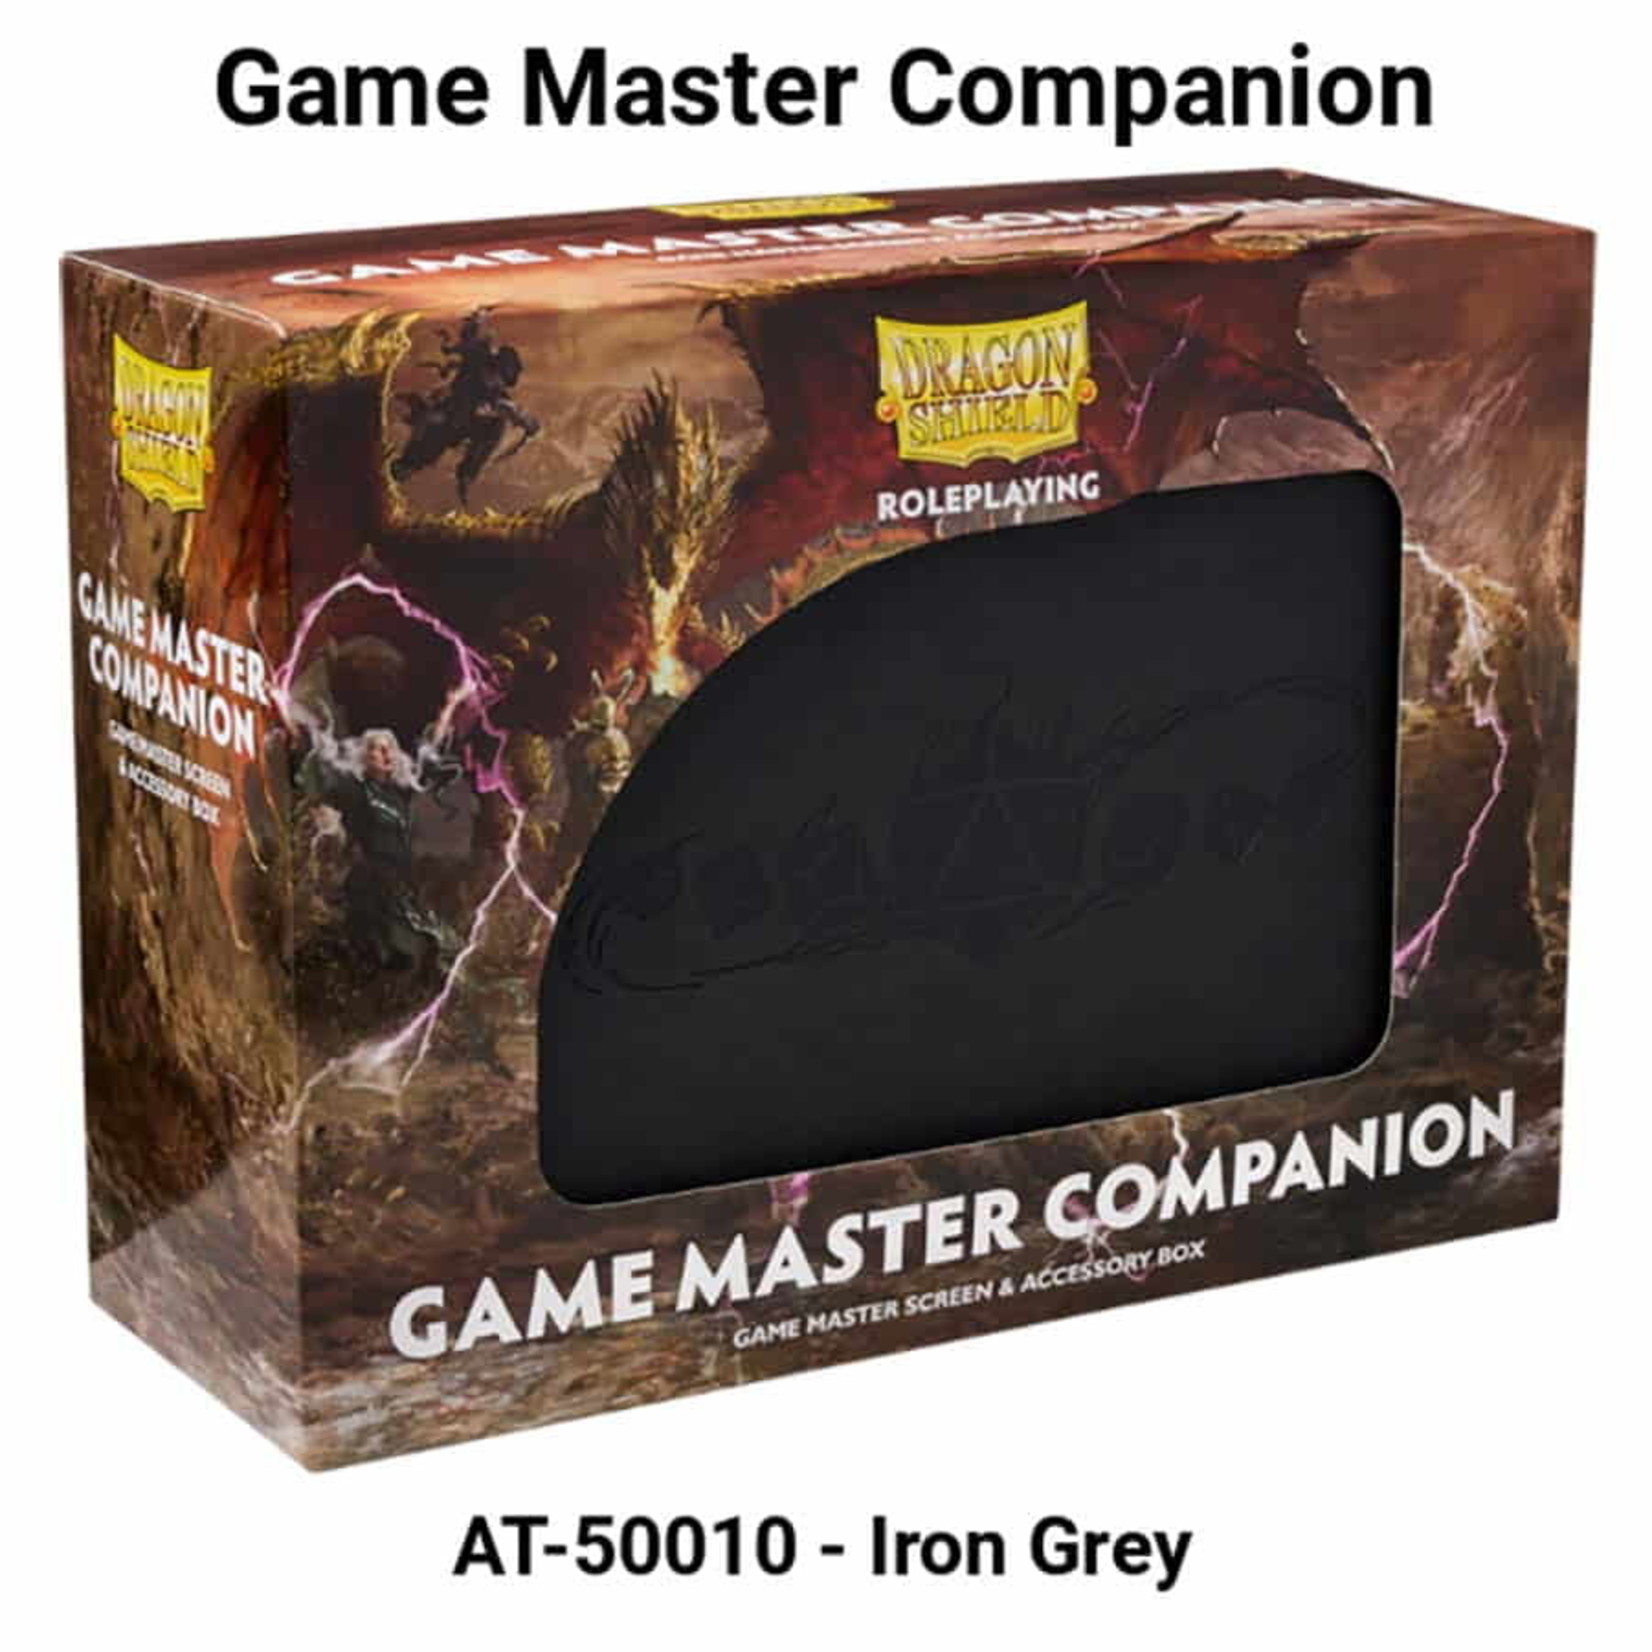 Arcane Tinman Dragon Shield Roleplaying: Game Master Companion - Iron Grey